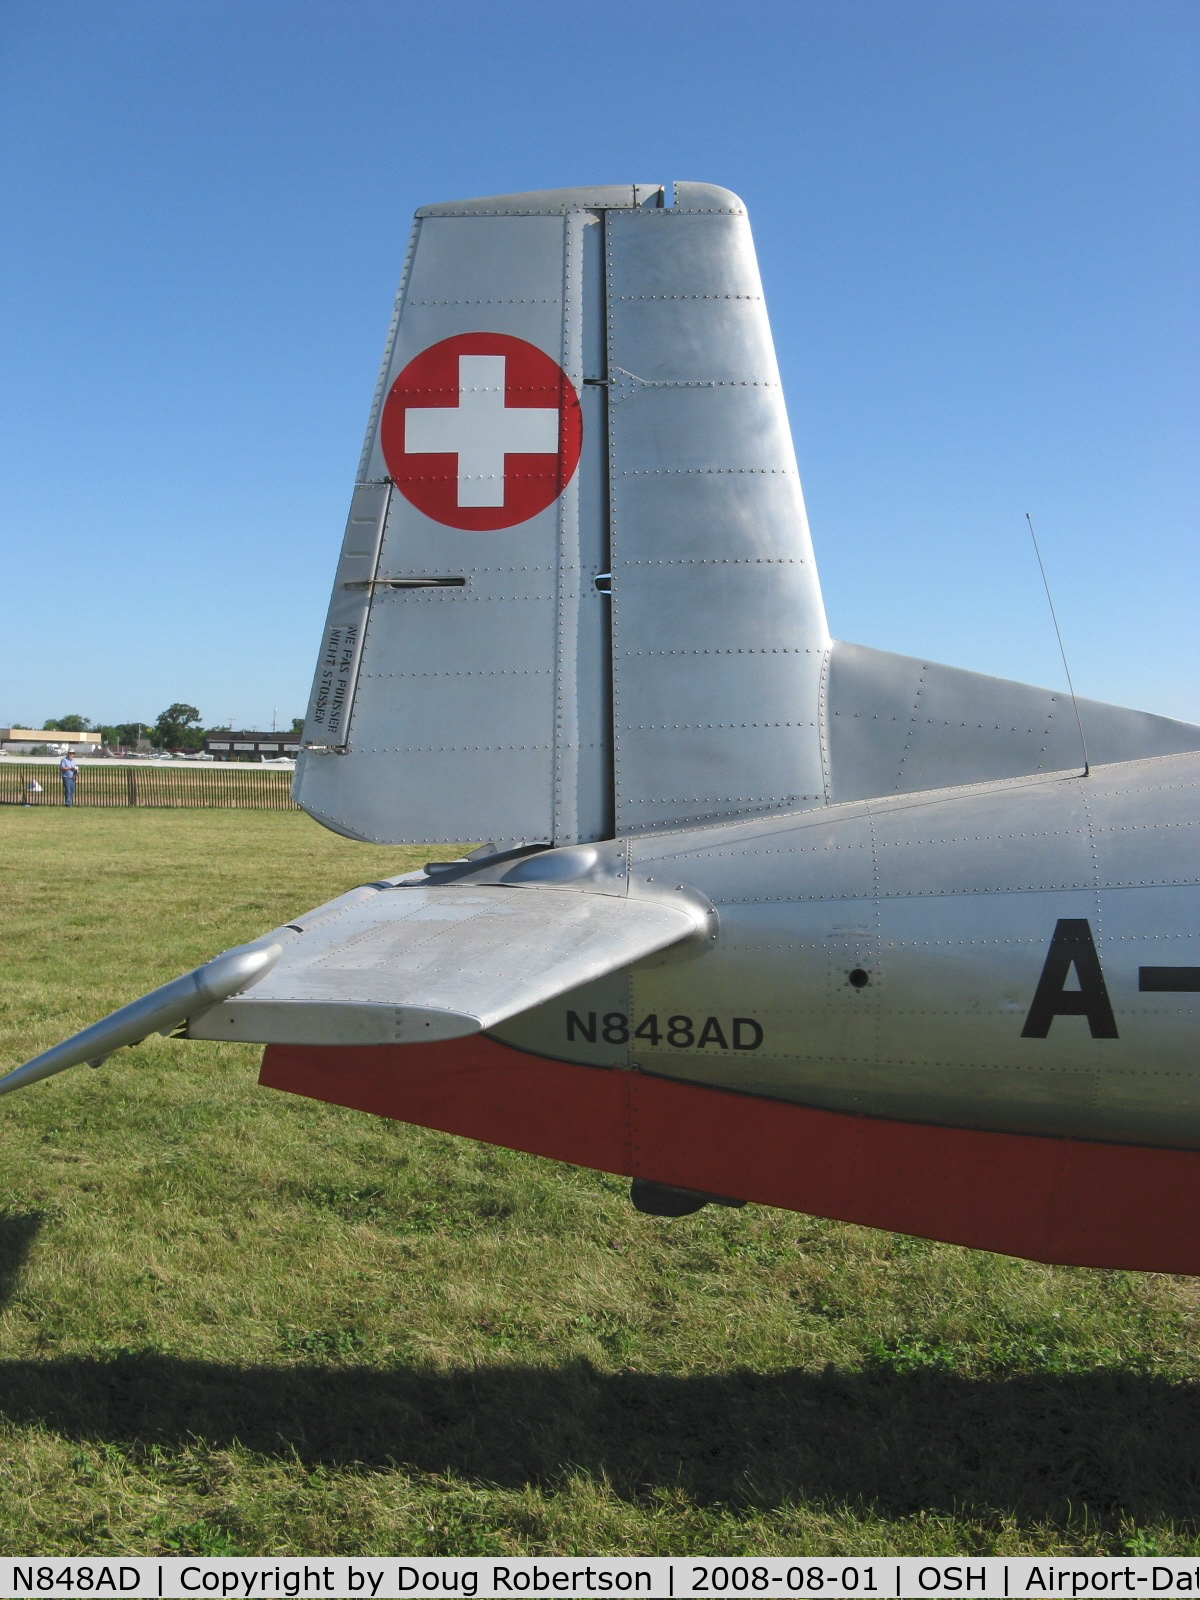 N848AD, 1959 Pilatus P3-05 C/N 486-35, 1959 Pilatus P3-05 Swiss Air Force intermediate trainer of 1950s, Lycoming GO-435-C&D 260 Hp, tail with Swiss flag